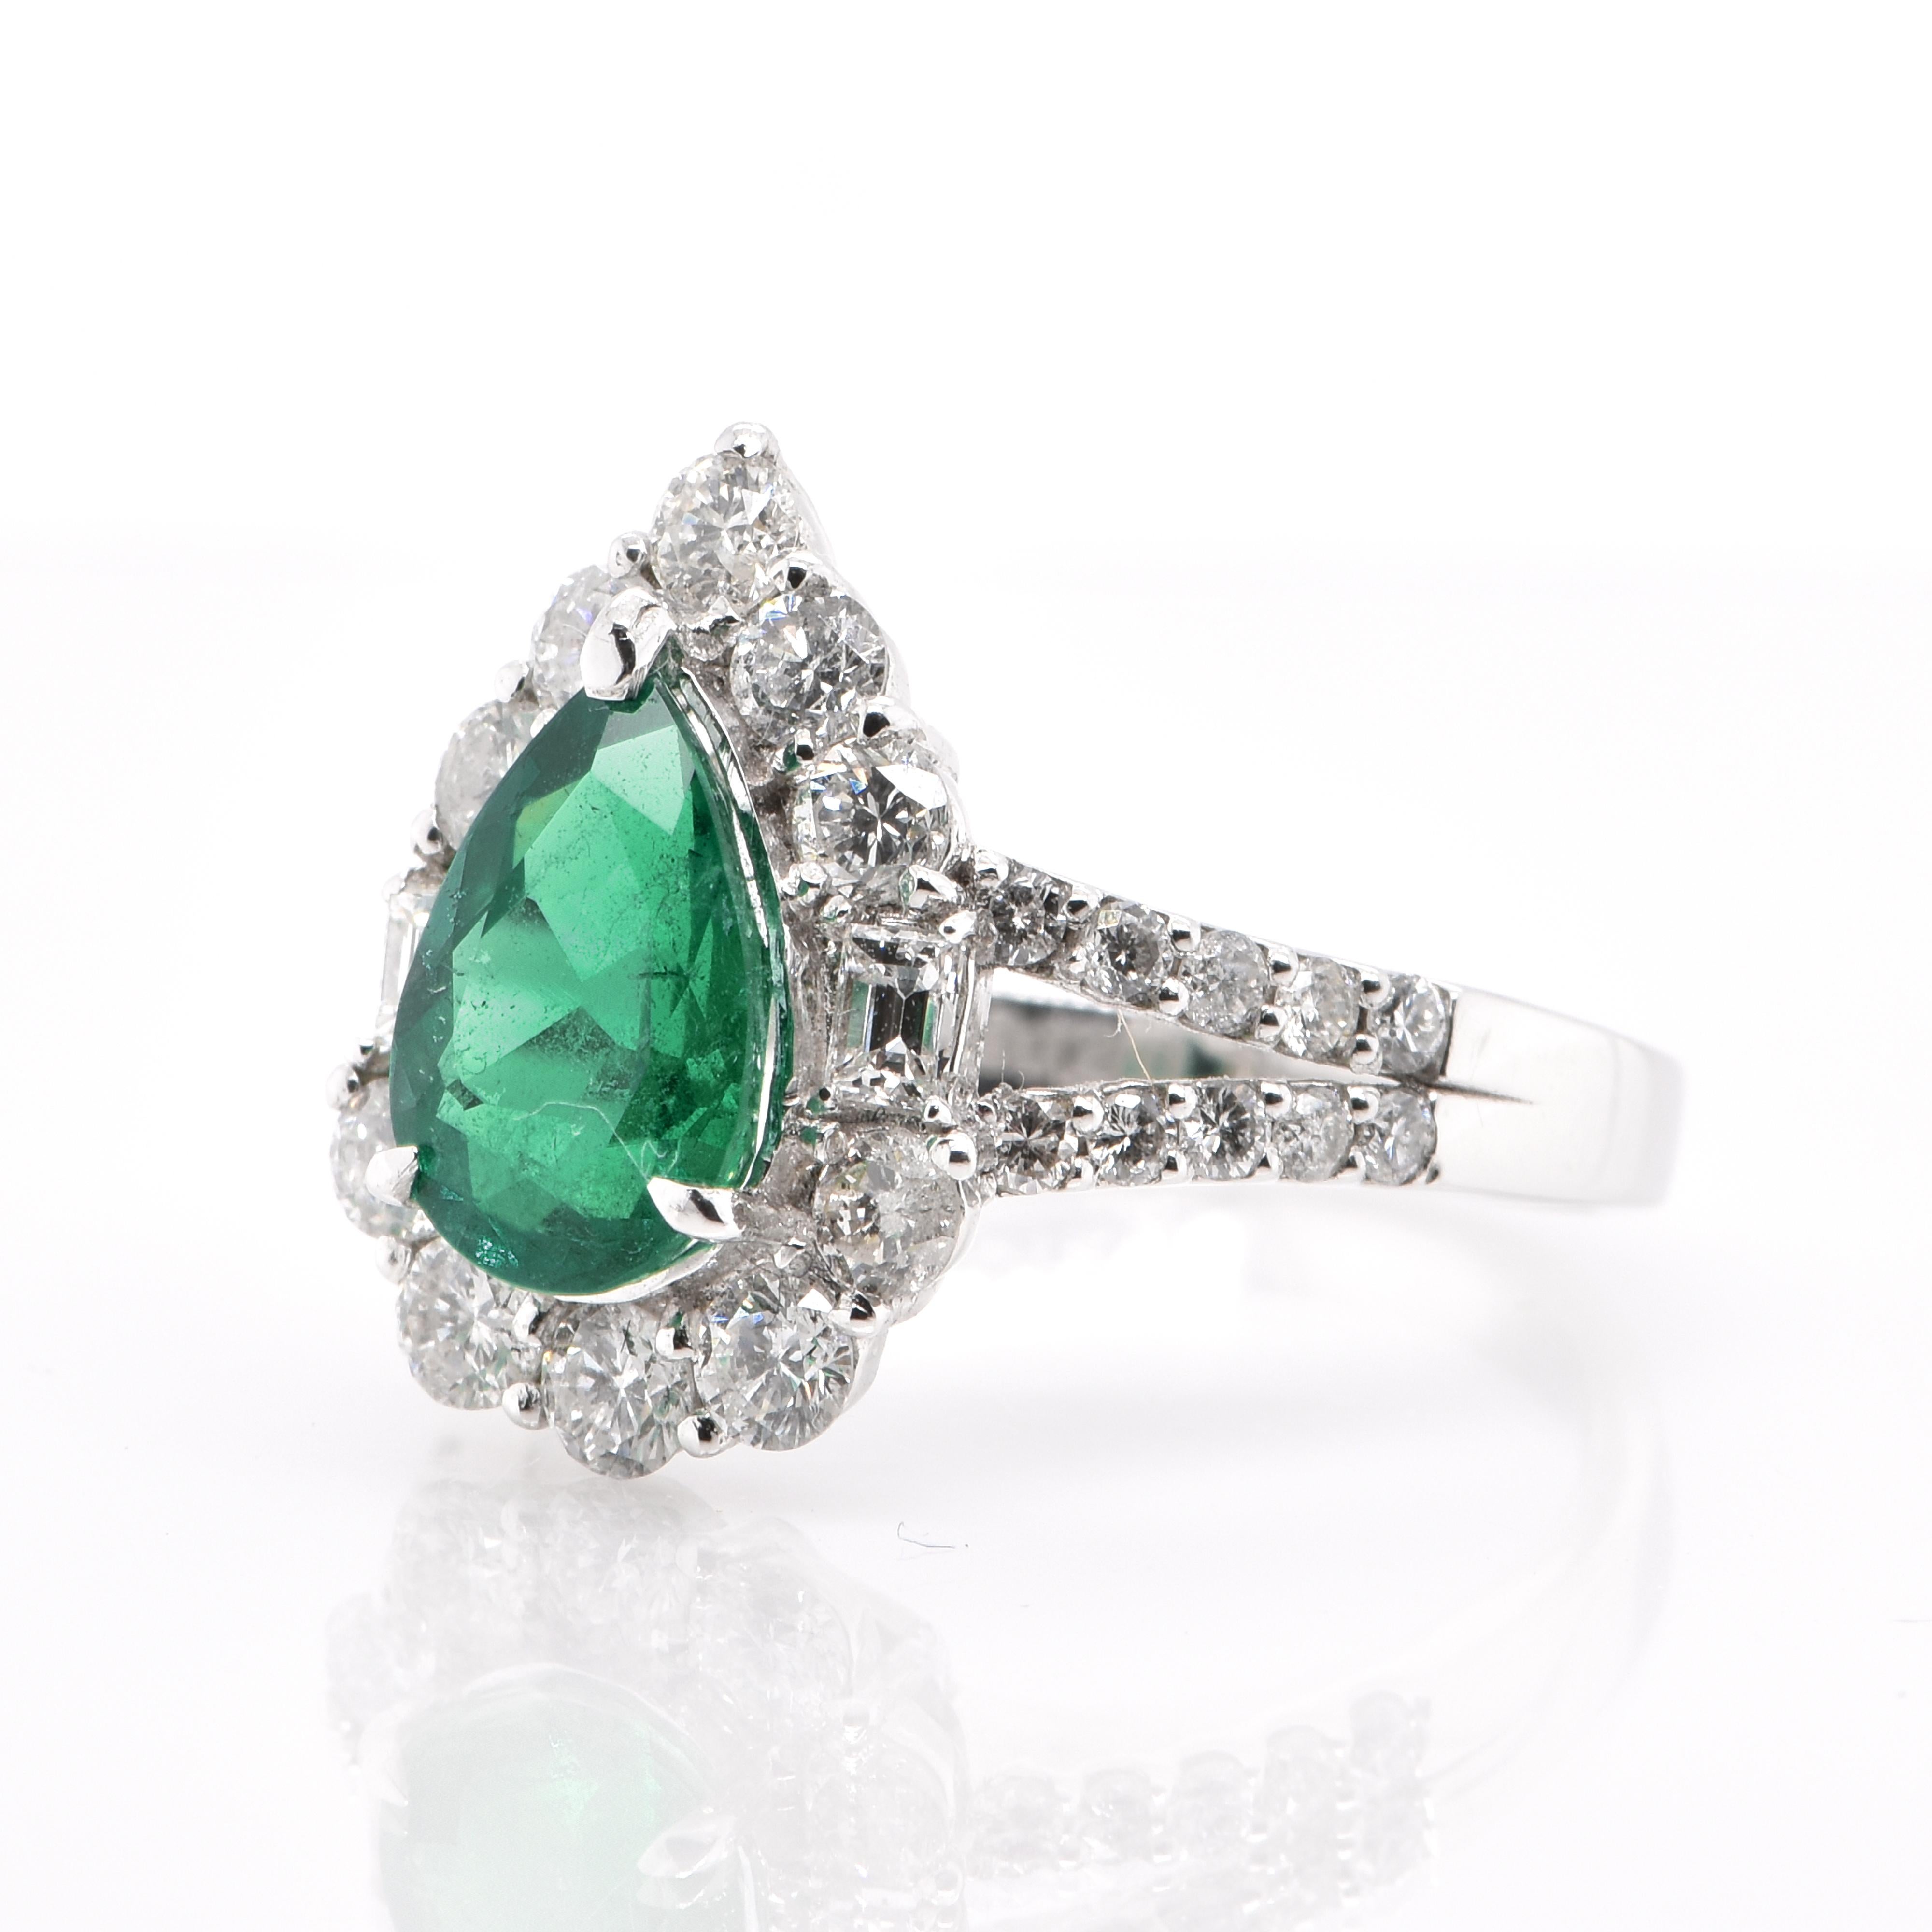 Modern 1.64 Carat Natural Pear Shape Emerald and Diamond Ring Set in Platinum